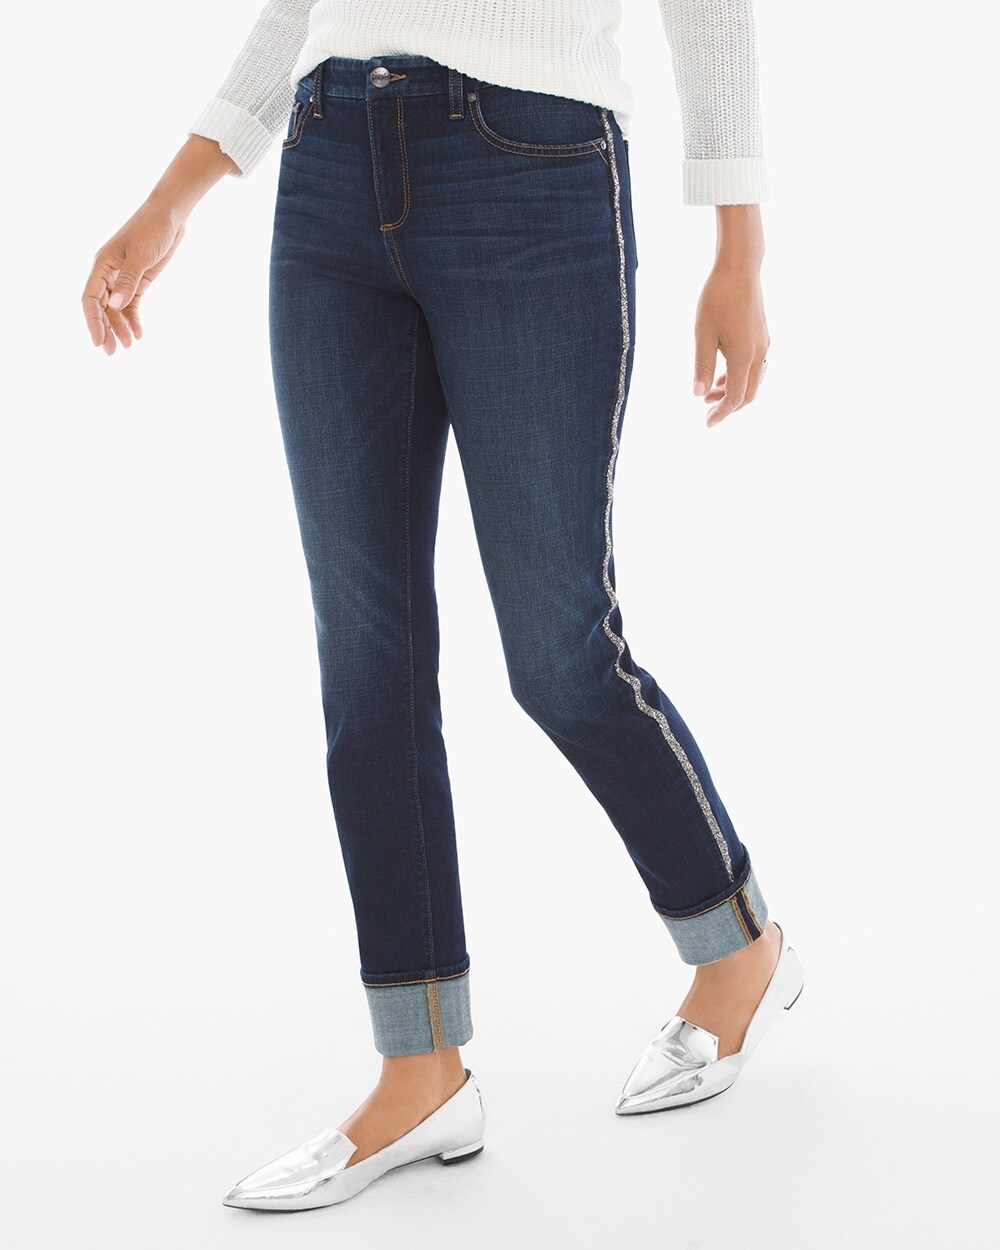 So Slimming Side Embellished Girlfriend Jeans